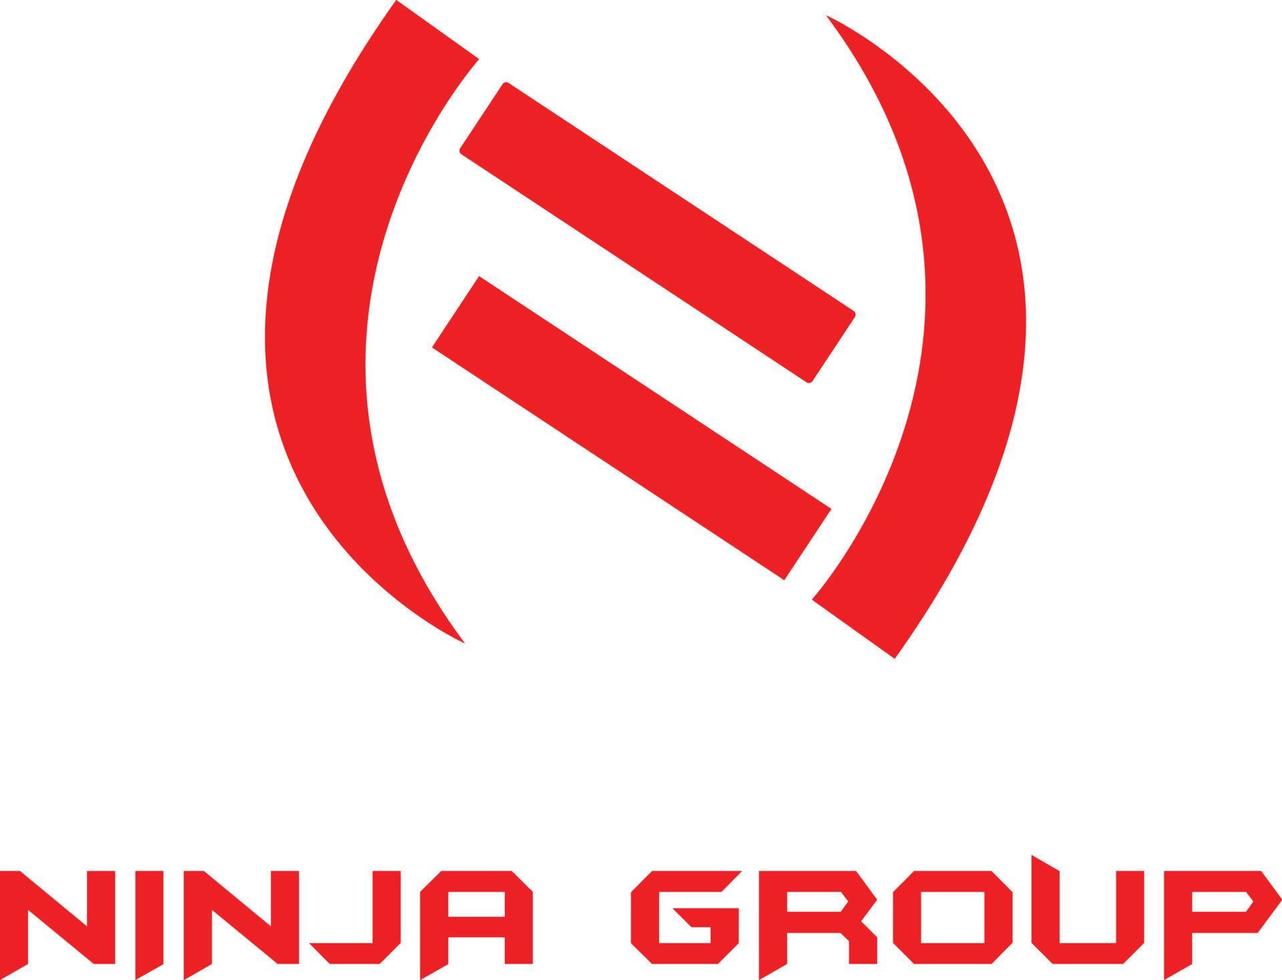 Ninja Group Logo Vector File